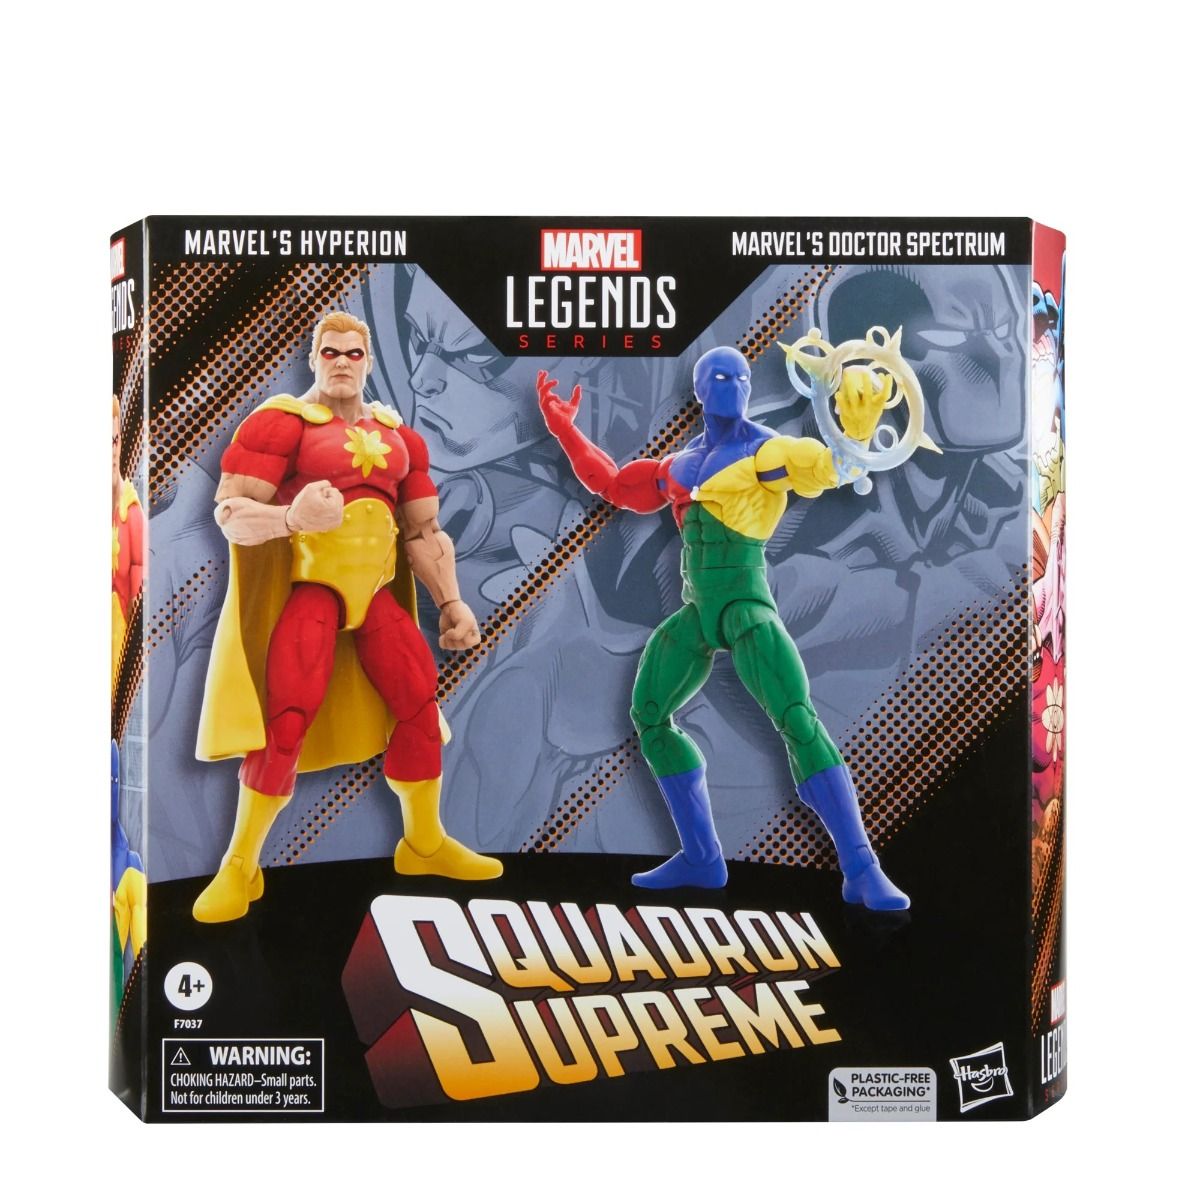 Marvel Legends Squadron Supreme Marvel's Hyperion and Marvel's Doctor Spectrum 2-Pack画像